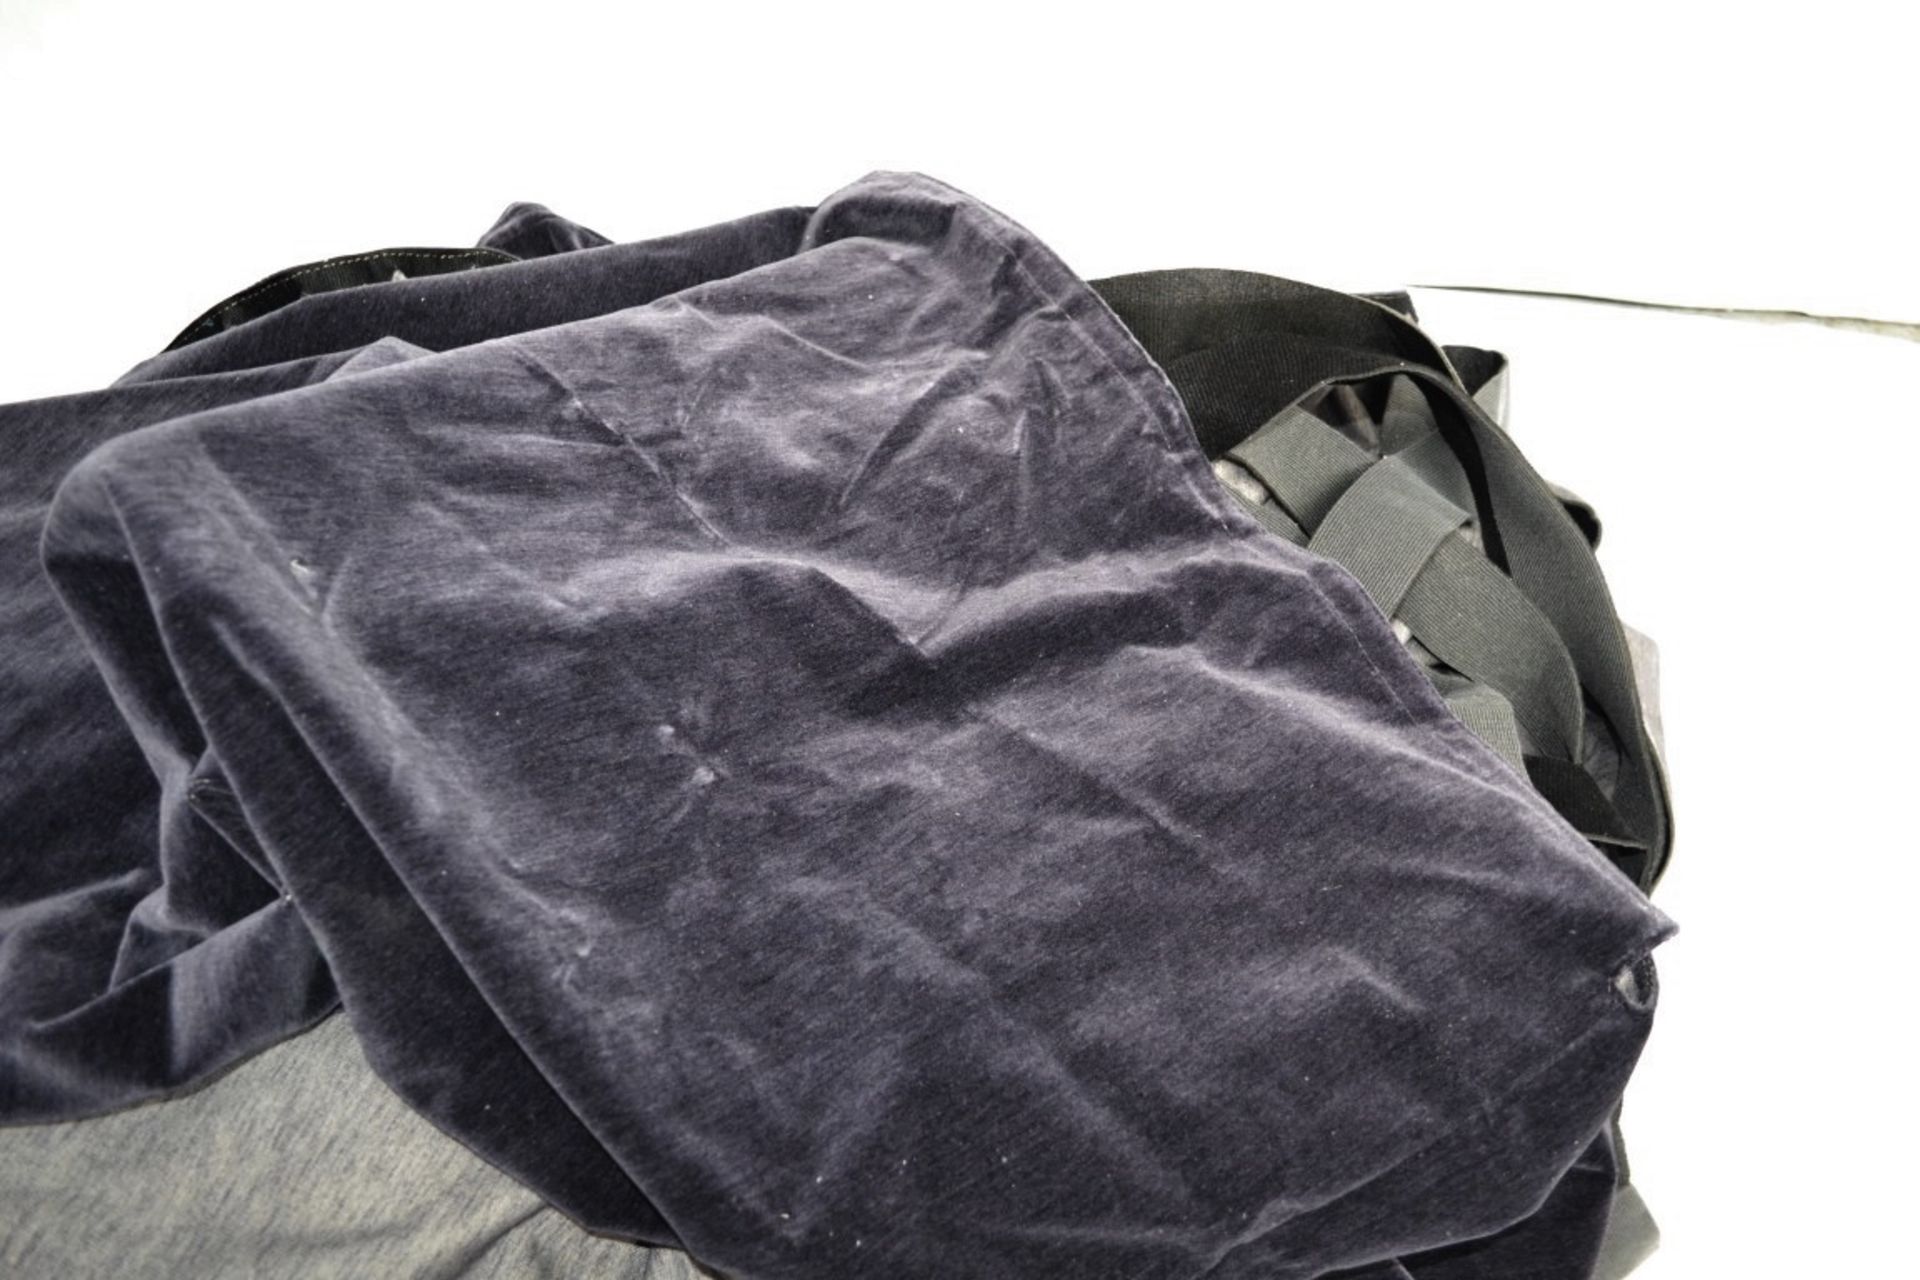 1 x B&B ITALIA "Fat Sofa 210" Cover - Stain-resistant Velvet Fleece Fabric - Ref: 5129664 - - Image 7 of 10